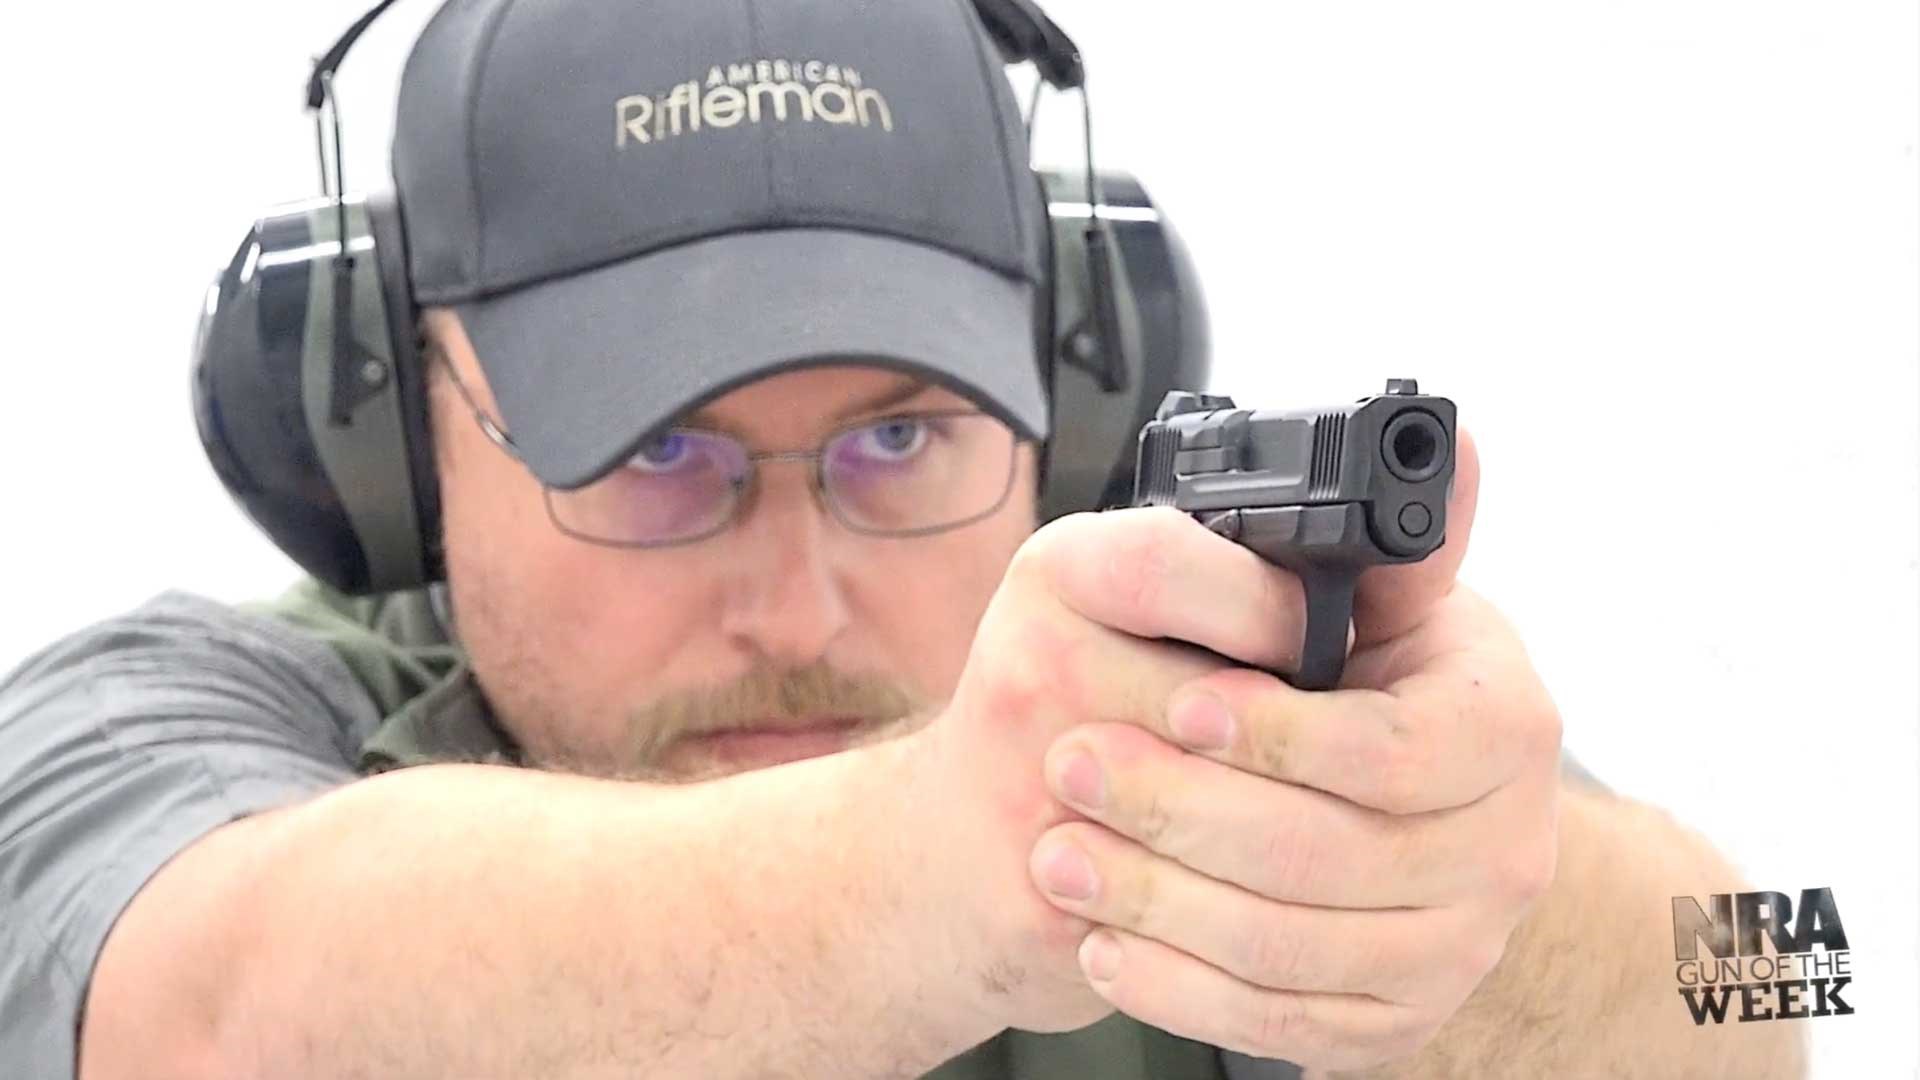 man shooting pistol on shooting range smith & wesson CSX handgun